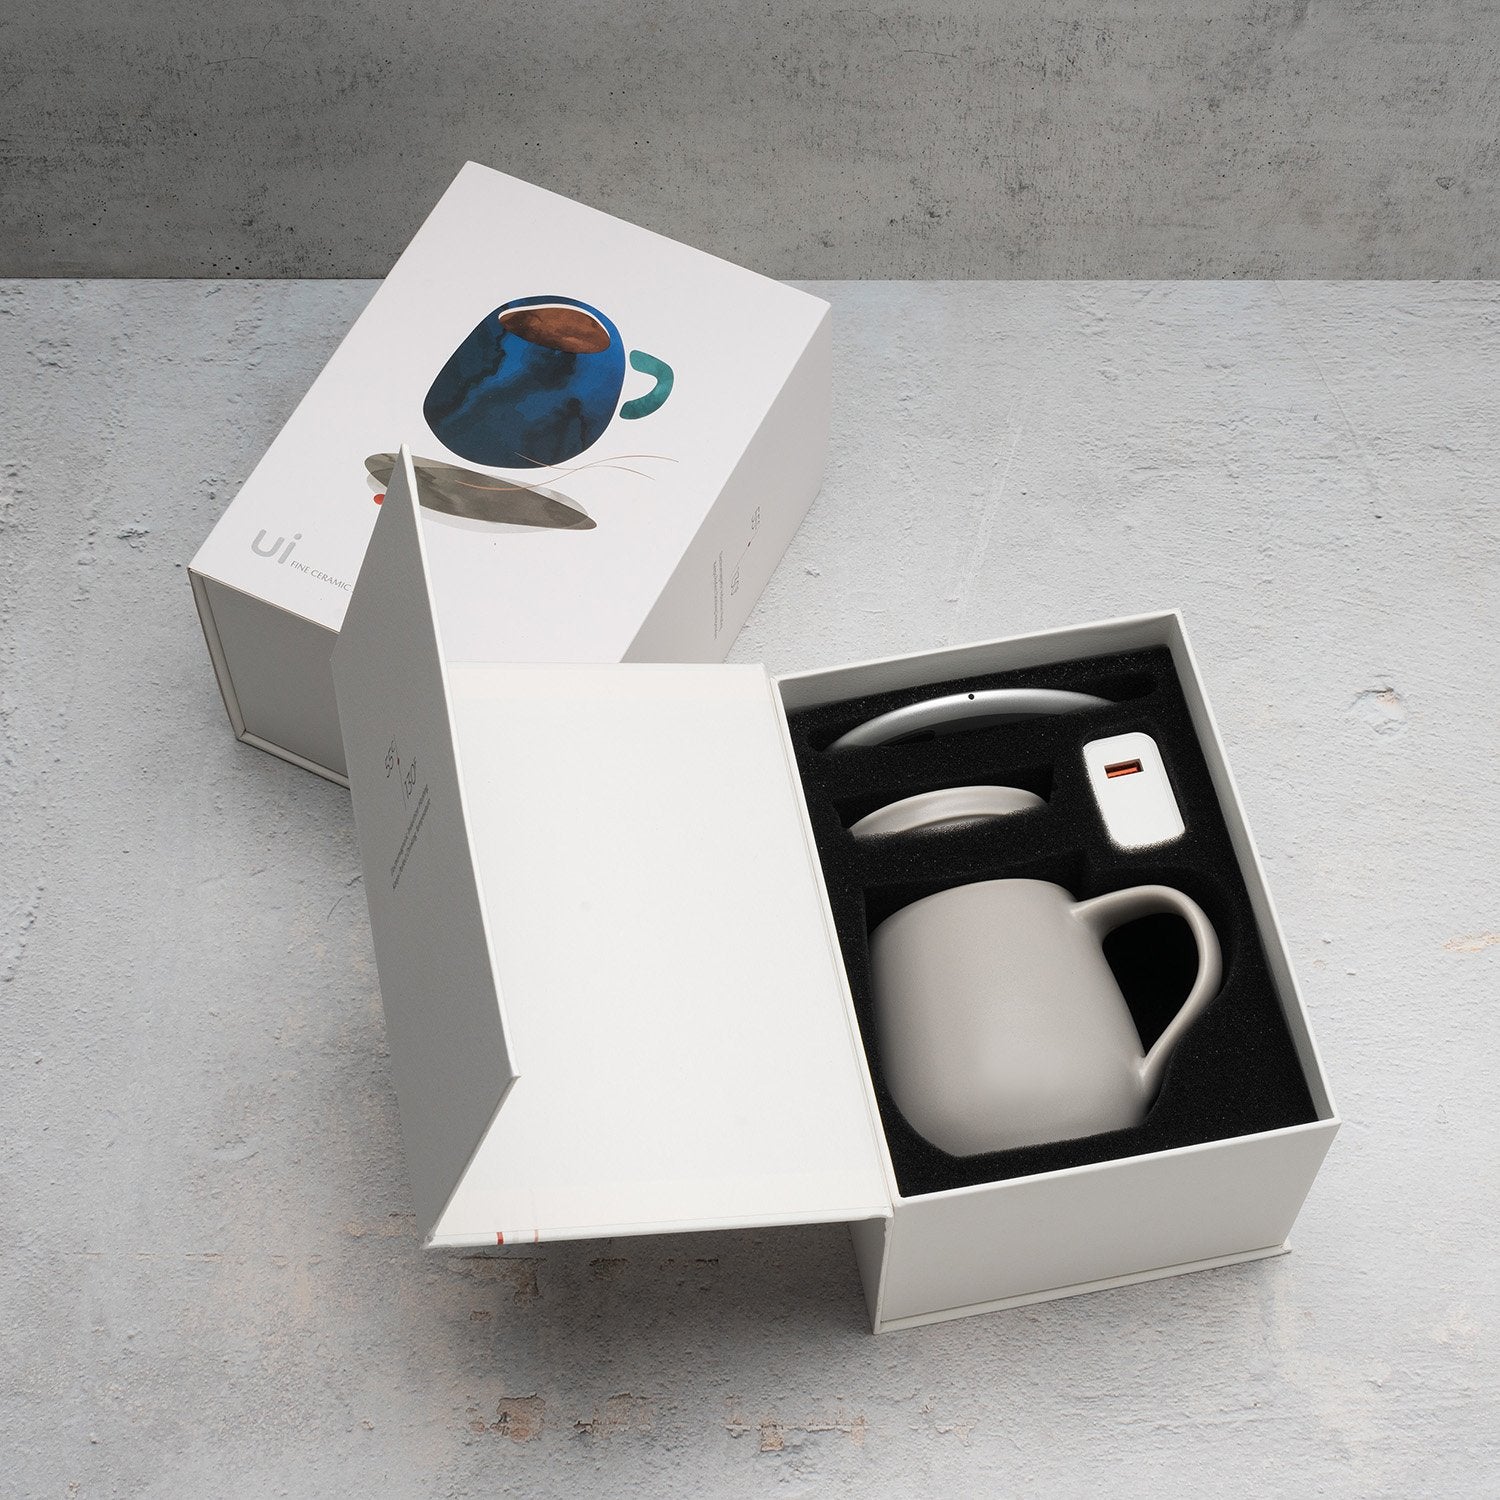 Mug set inside packaging